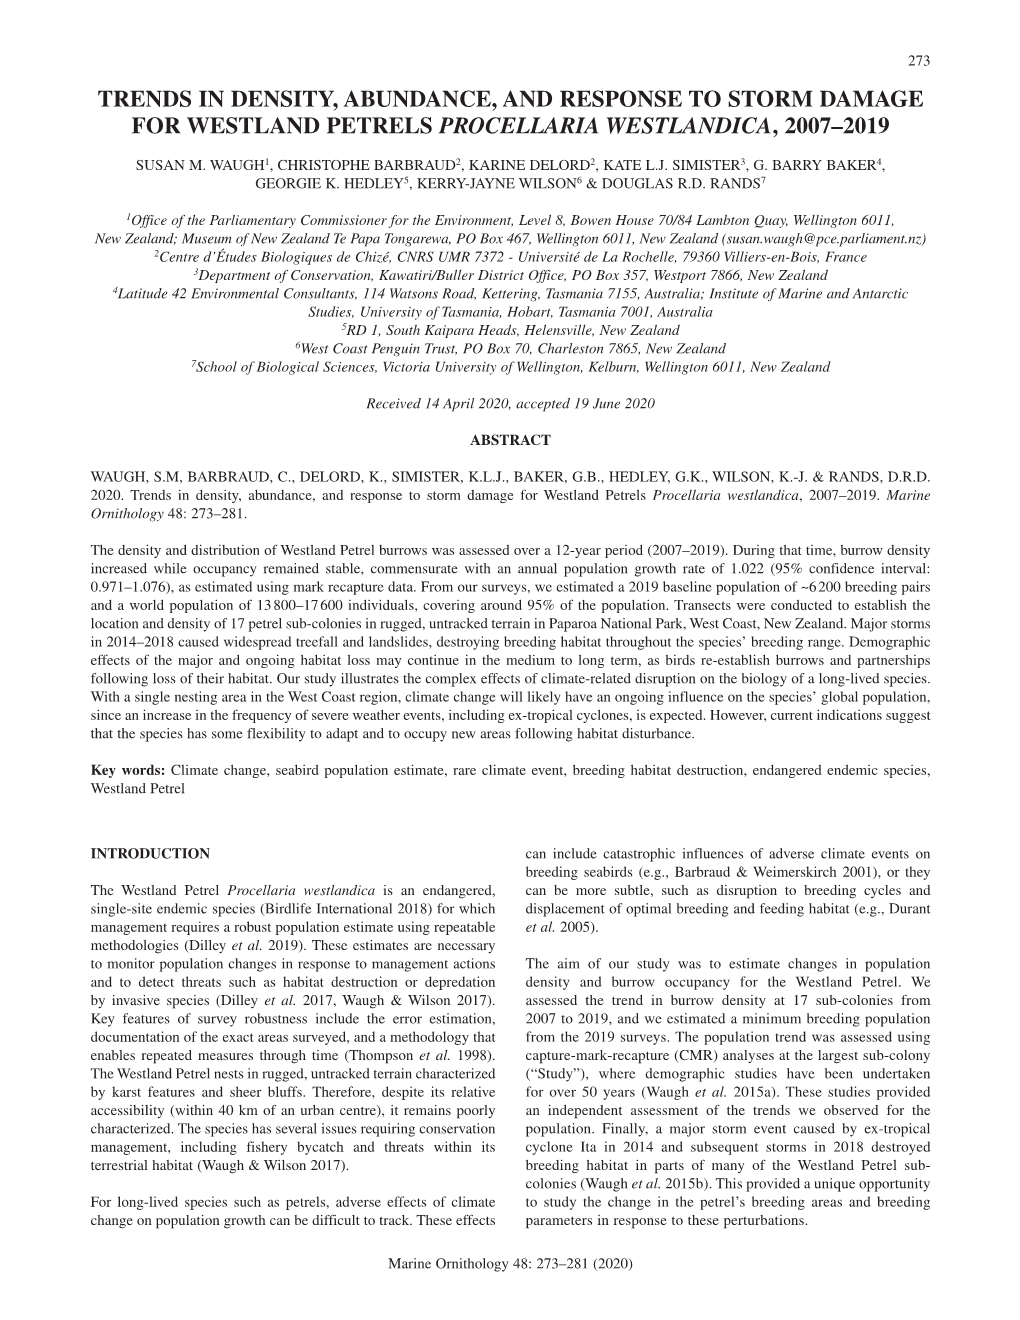 Trends in Density, Abundance, and Response to Storm Damage for Westland Petrels Procellaria Westlandica, 2007–2019